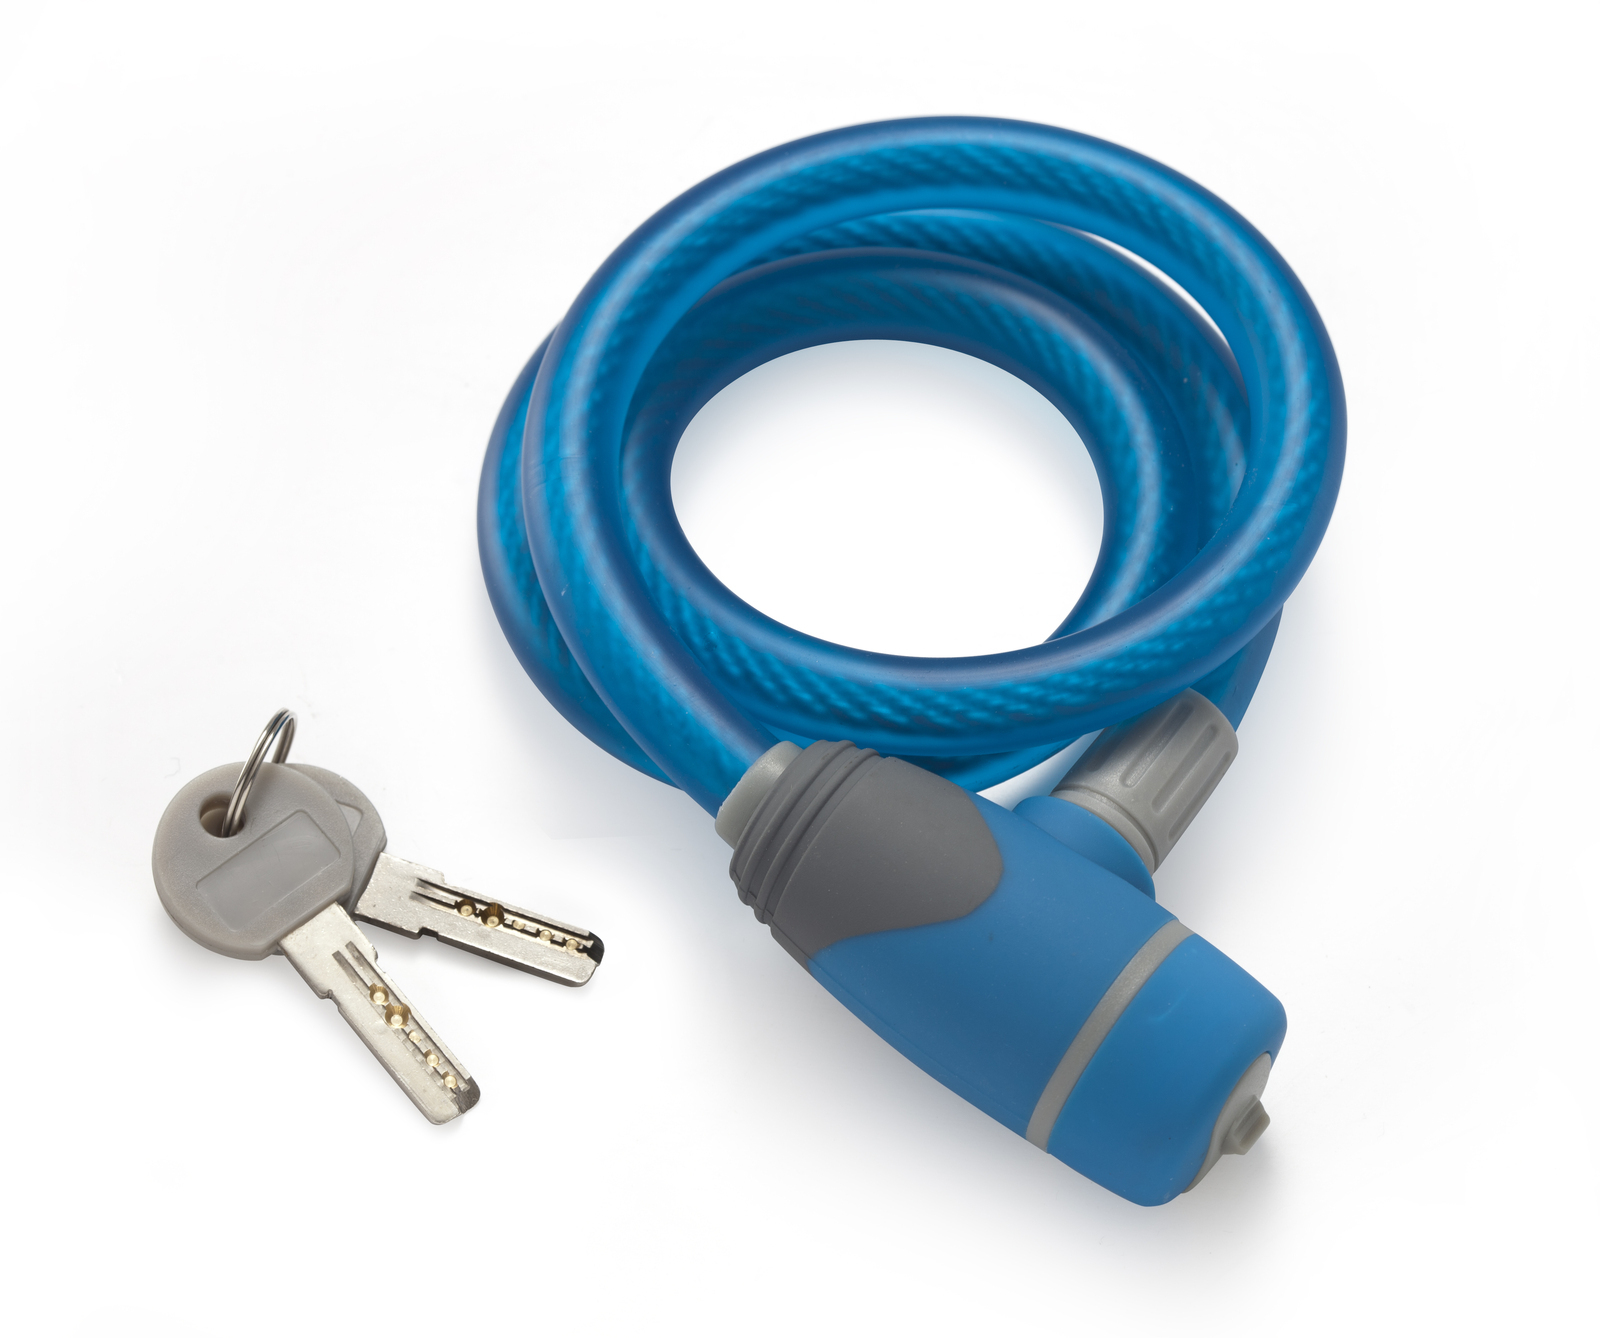  Bike Lock Cable Spiral 10Mmx750Mm W/ 2 Keys Blue In-Guage Brand  Bike Lock Cable Spiral 10Mmx750Mm W/ 2 Keys Blue In-Guage Brand